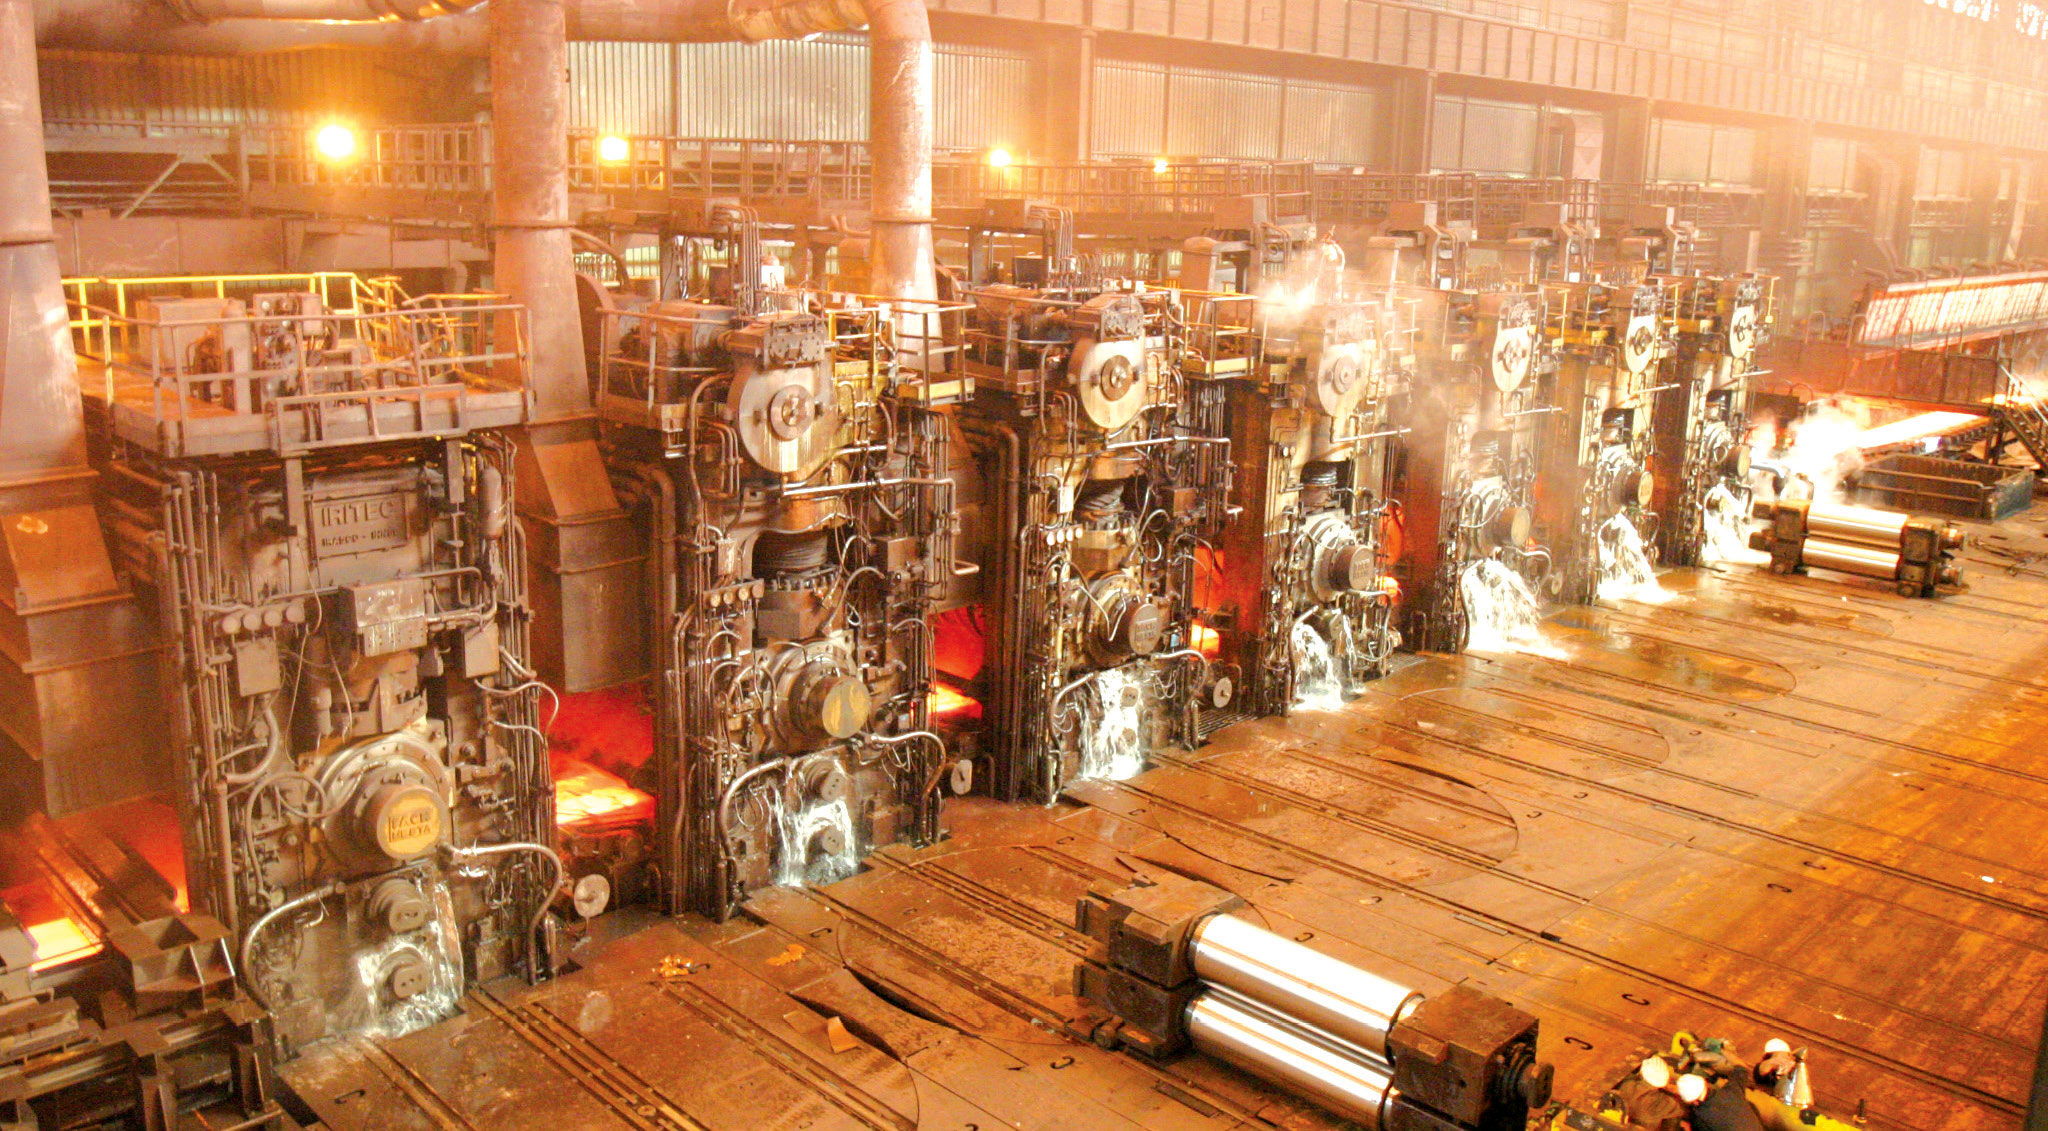 Iran’s Largest Steelmaker Raises $28m in Bond Sale